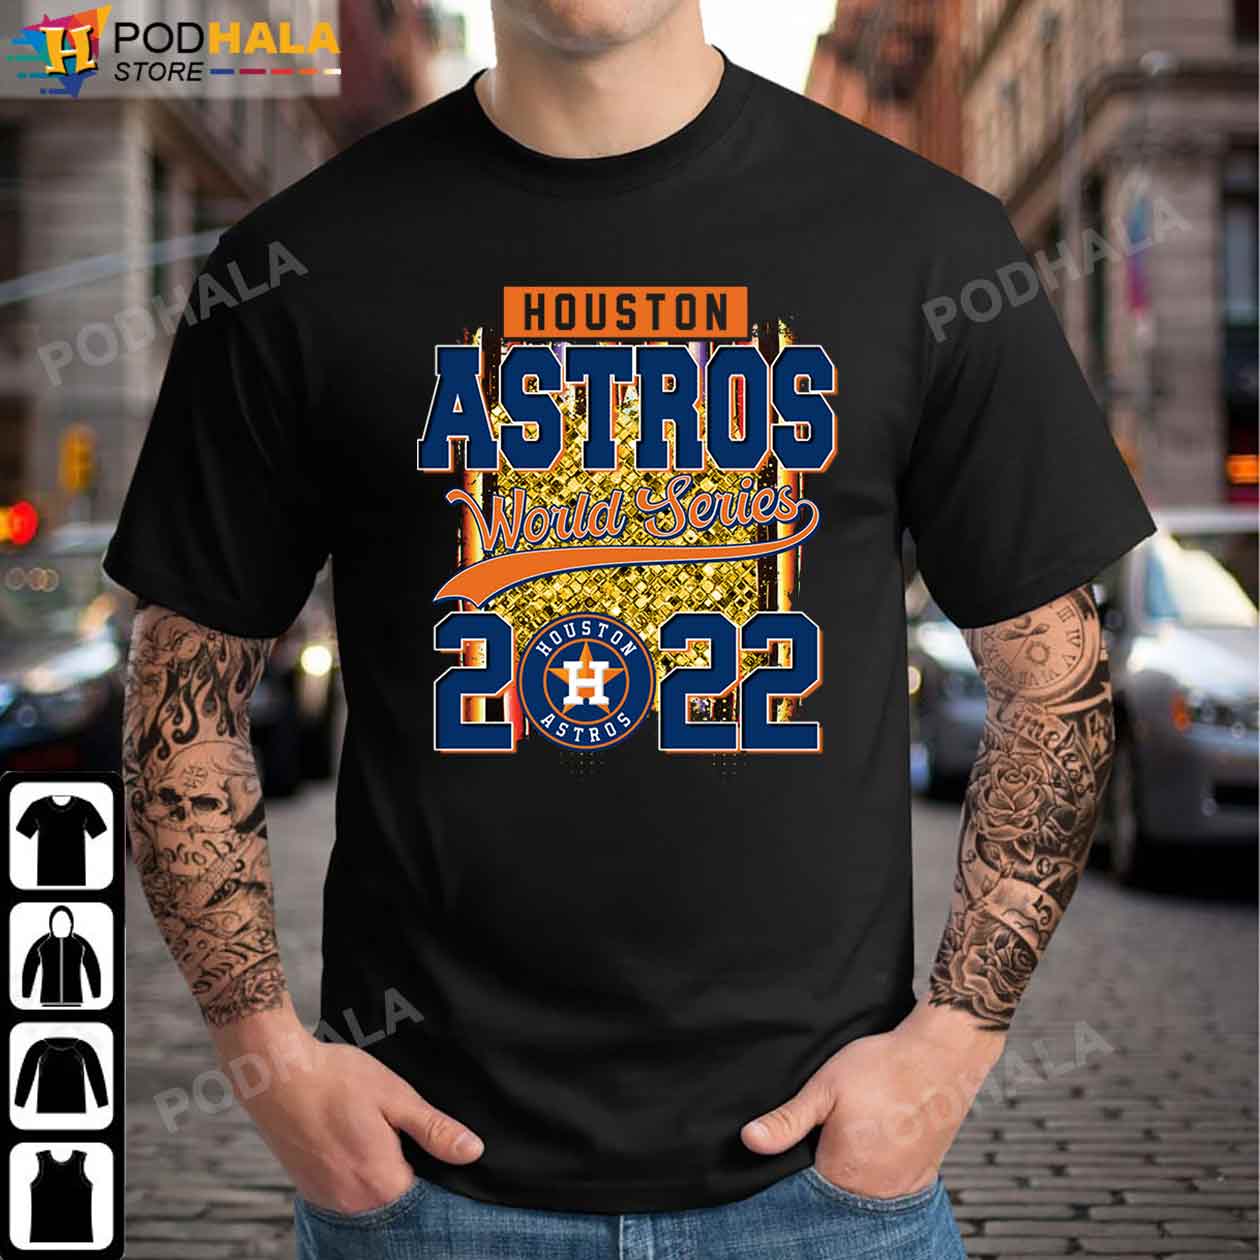 astros world champions shirts